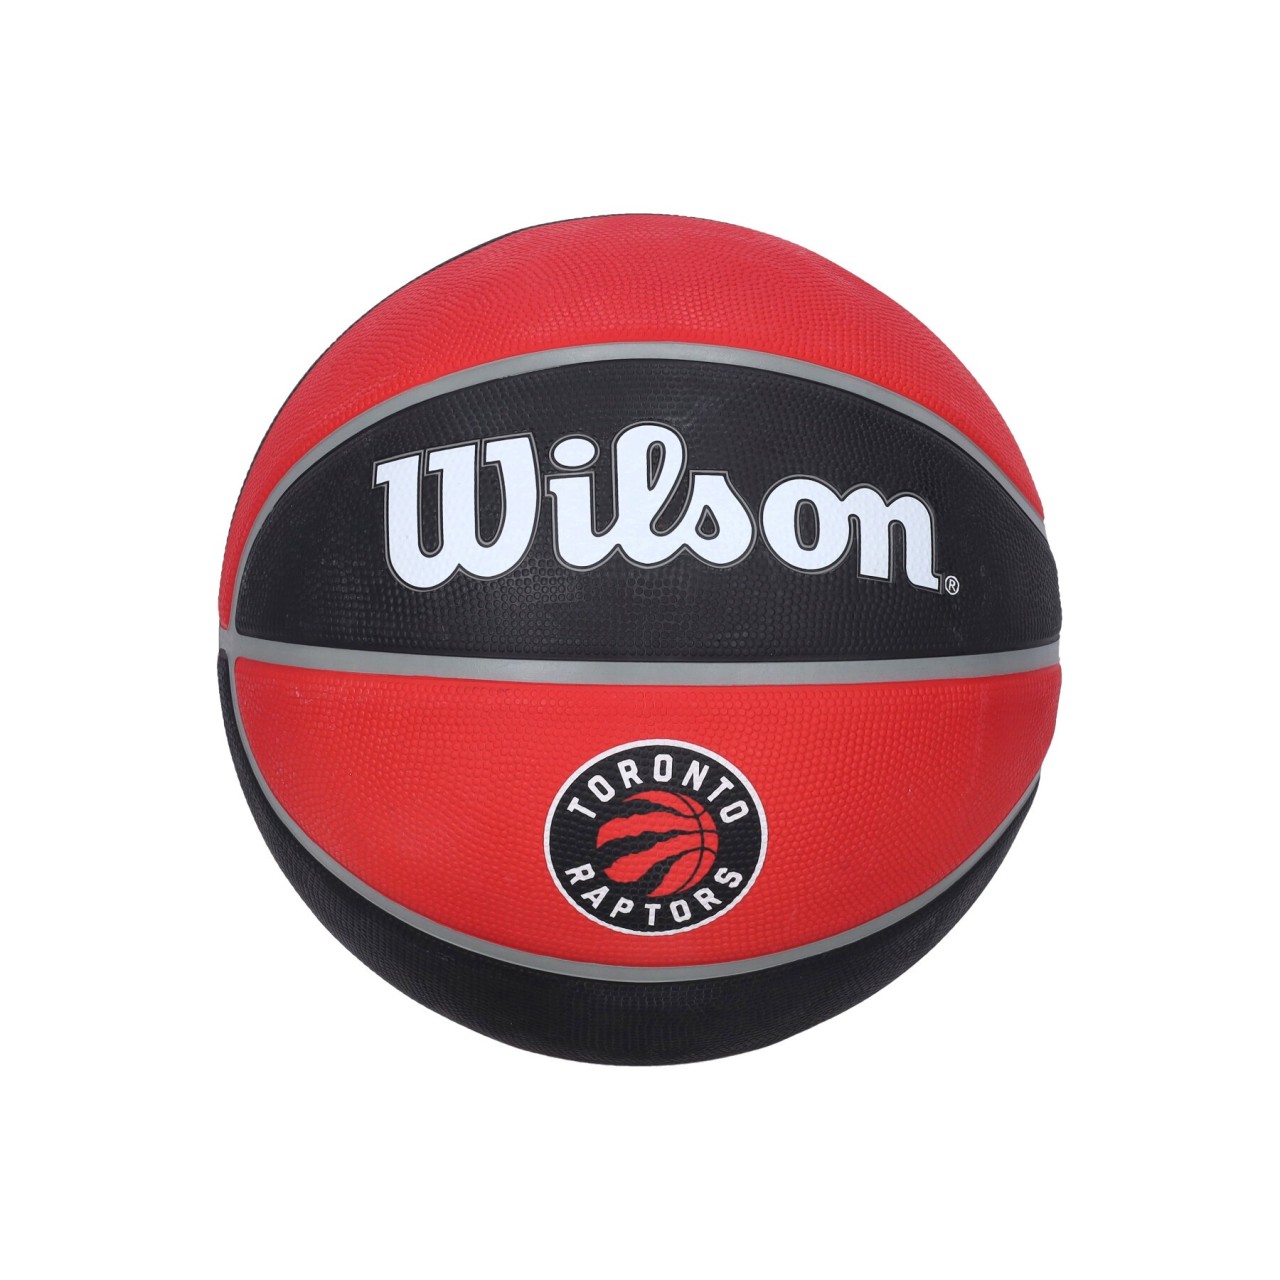 WILSON TEAM NBA TEAM TRIBUTE BASKETBALL SIZE 7 TORRAP WTB1300XBTOR